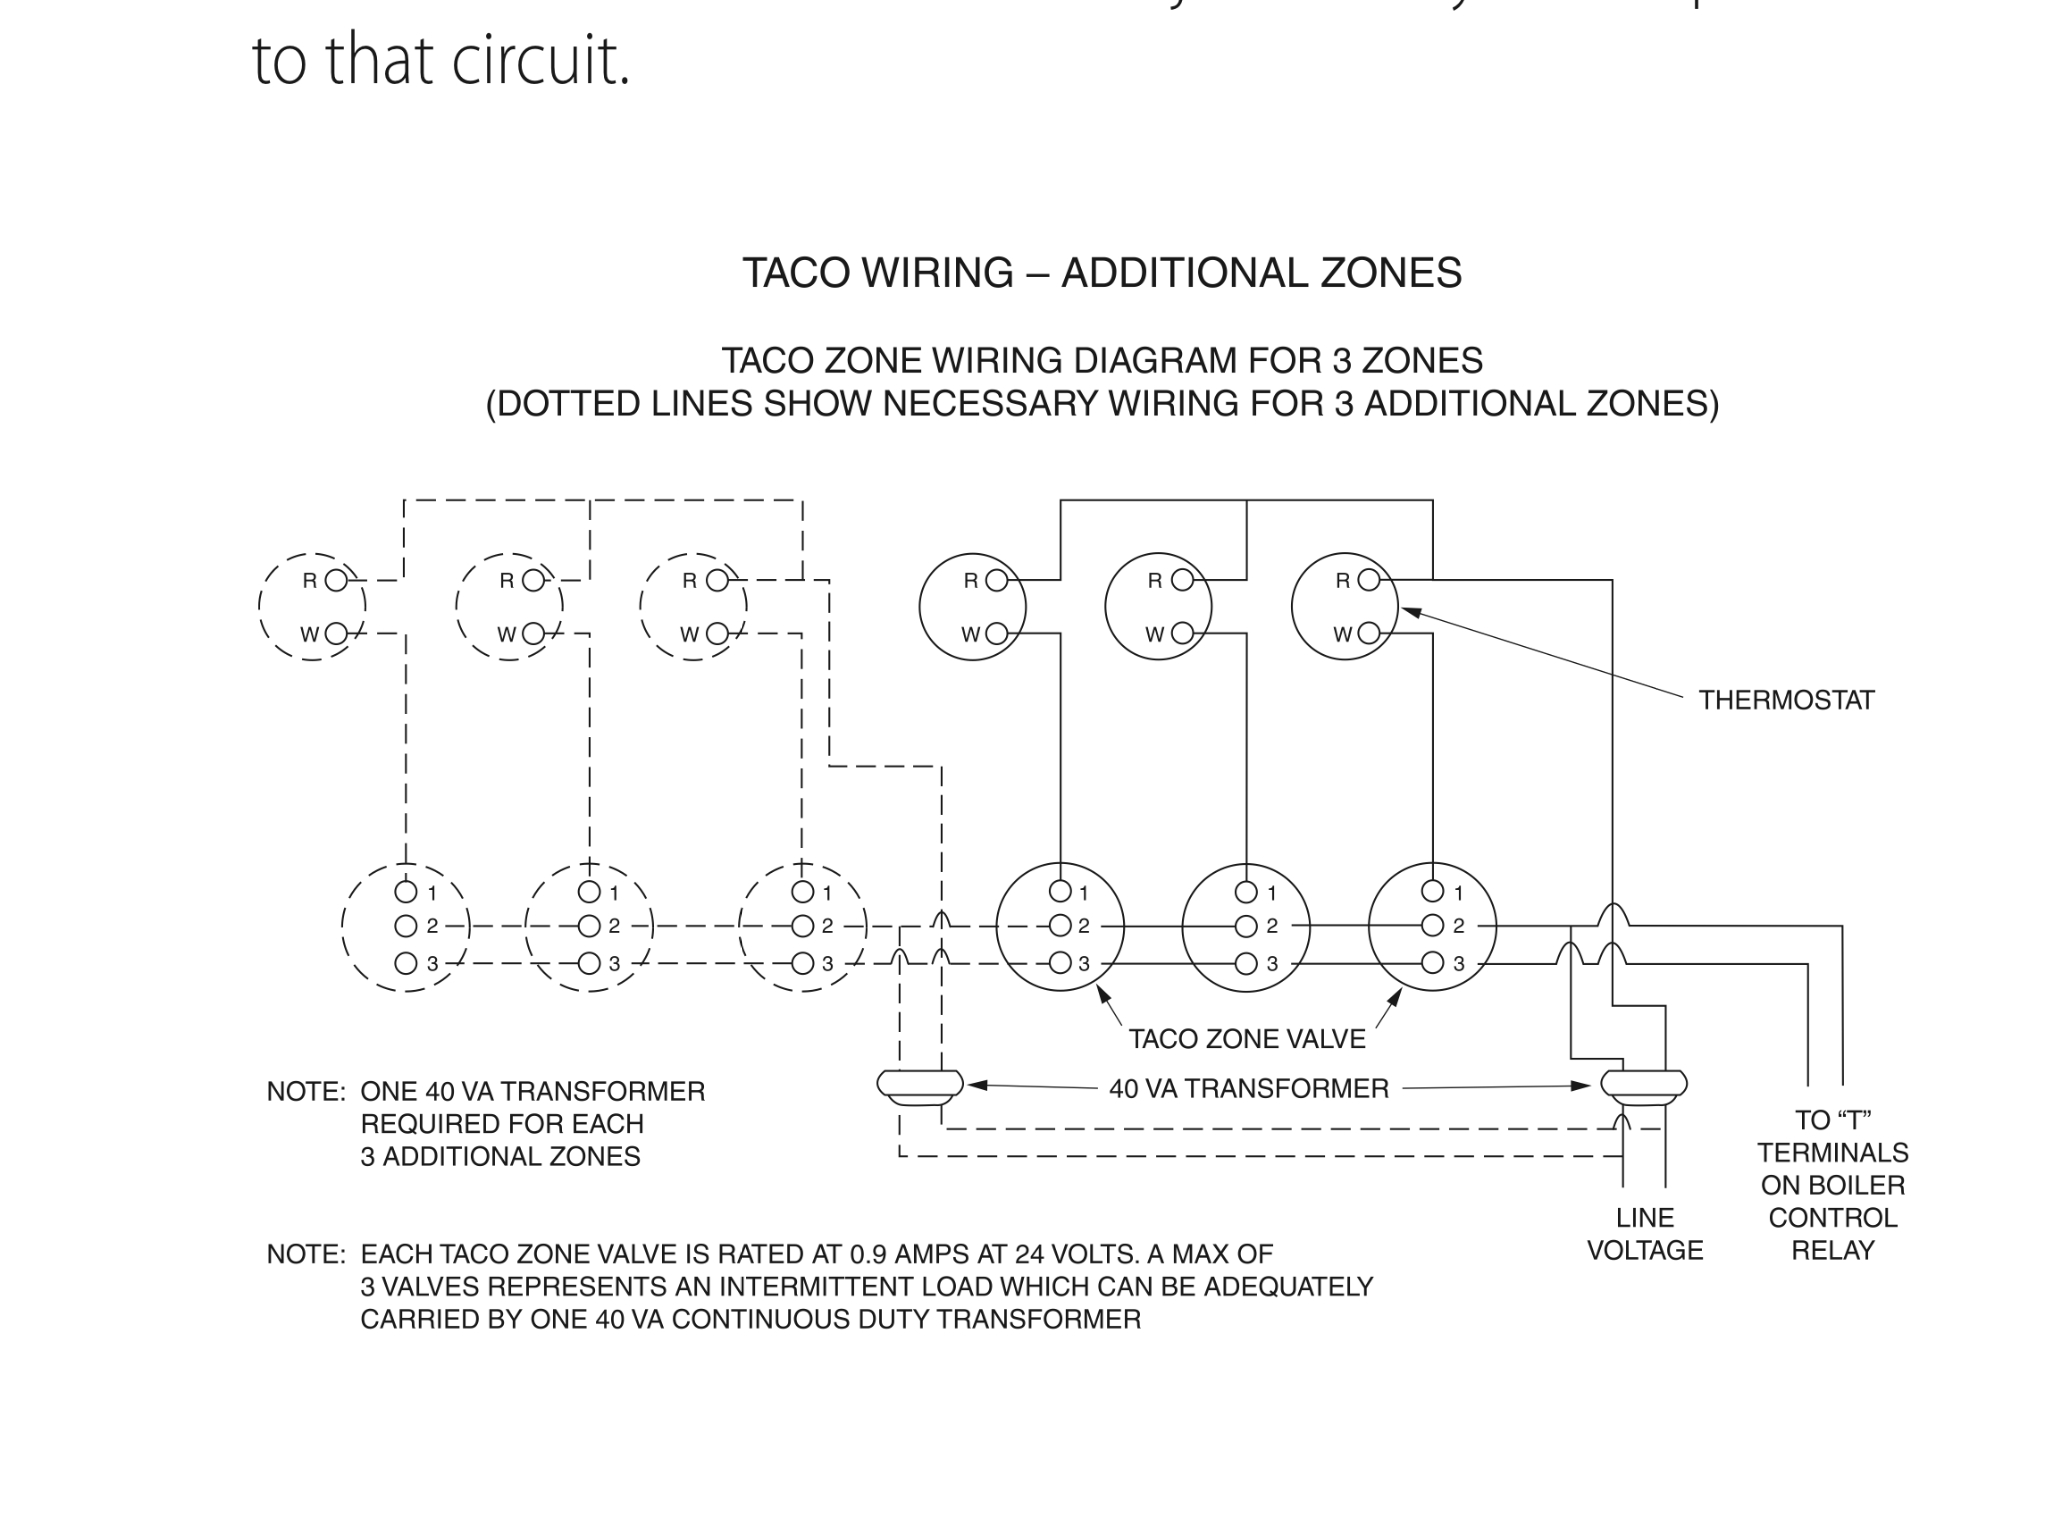 Taco Zone Valve Wiring Diagram 573 | Wiring Diagram - Taco Zone Valve Wiring Diagram